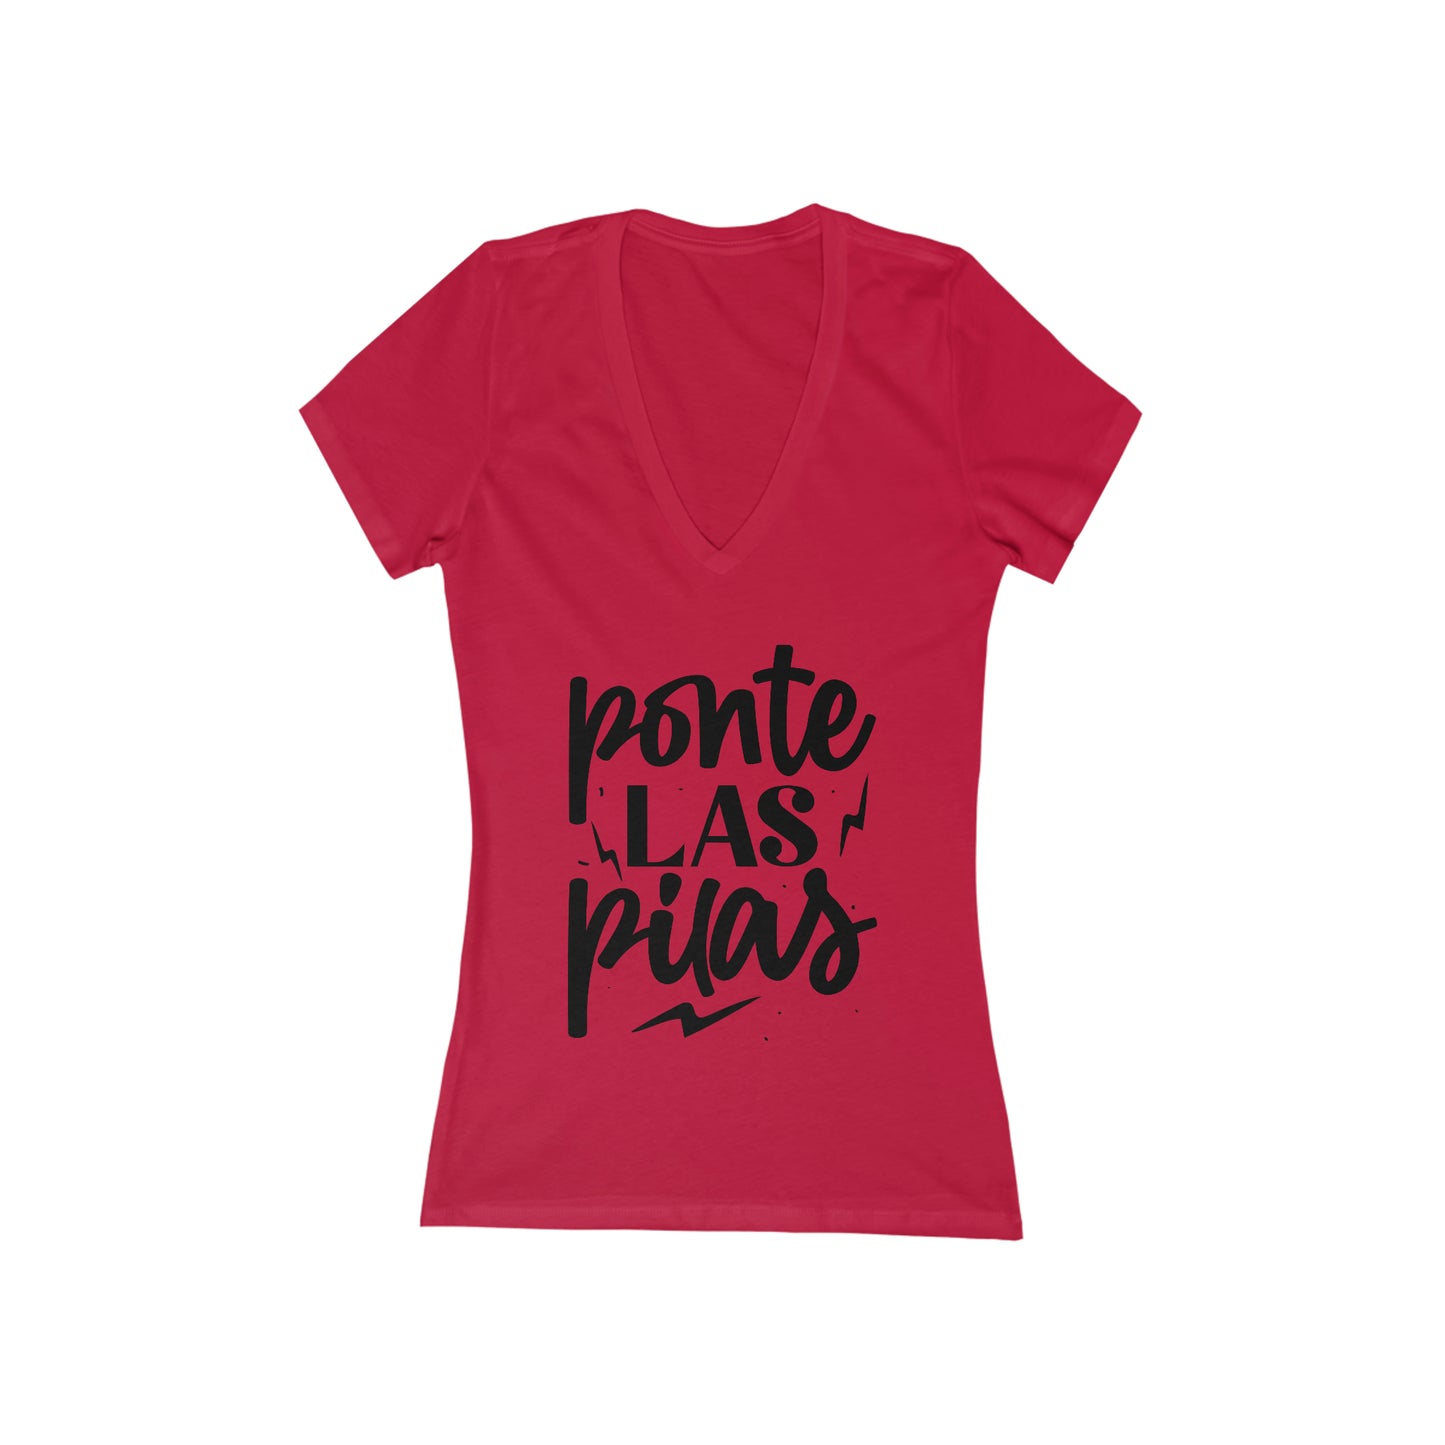 Ponte Las Pilas (Get to Work) Women's Jersey Short Sleeve Deep V-Neck Tee